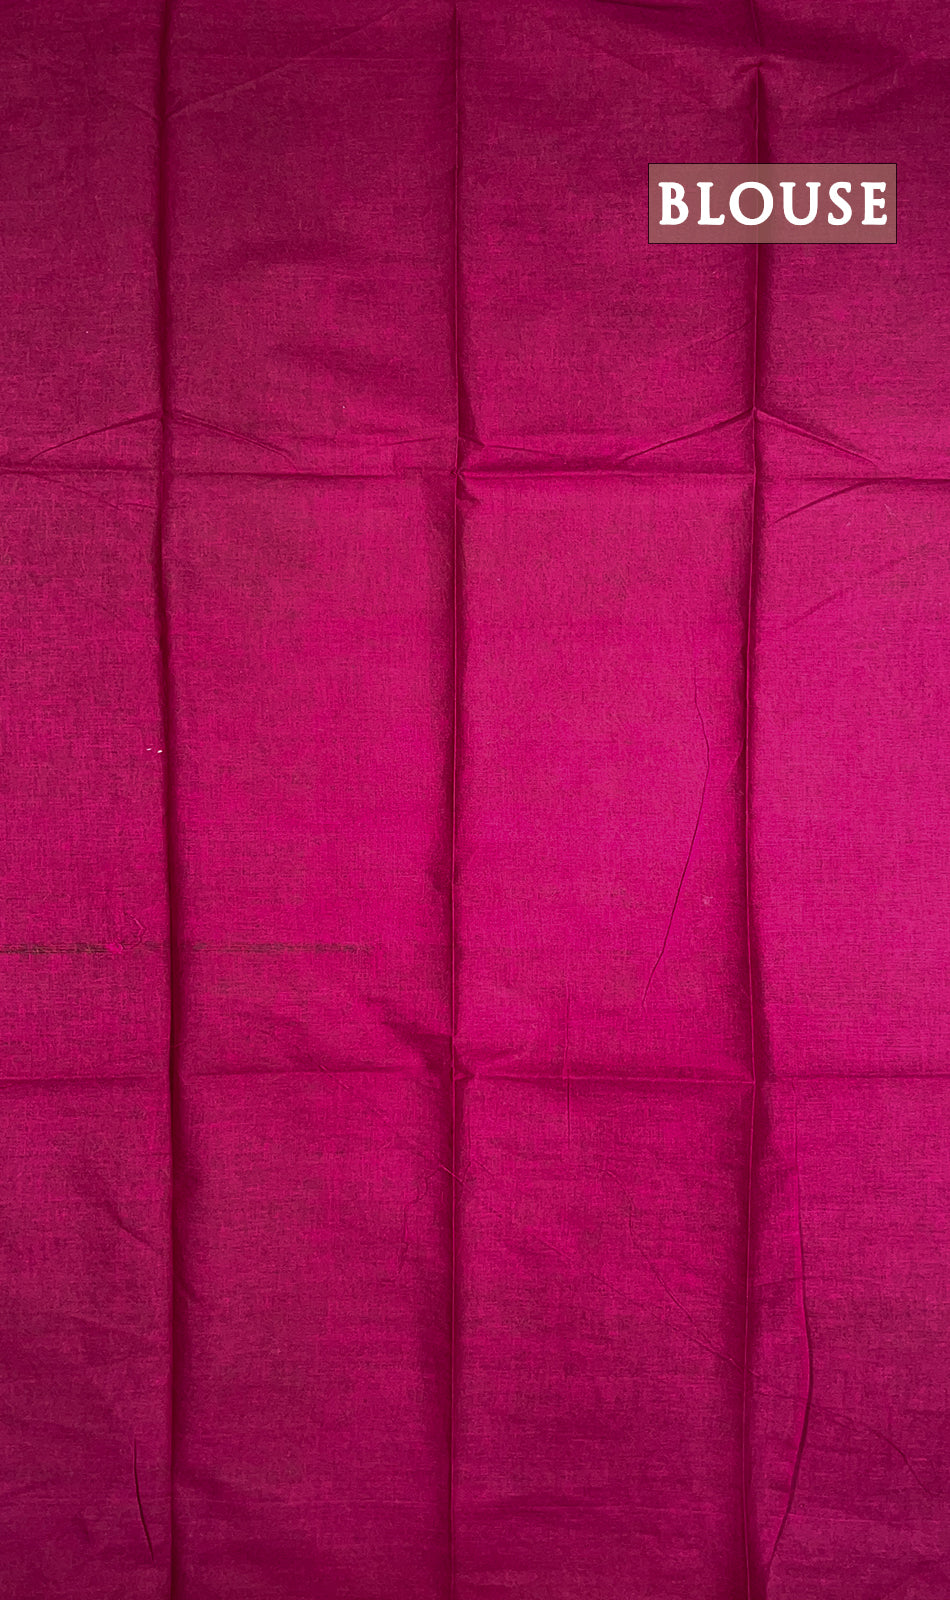 White and pink printed cotton saree